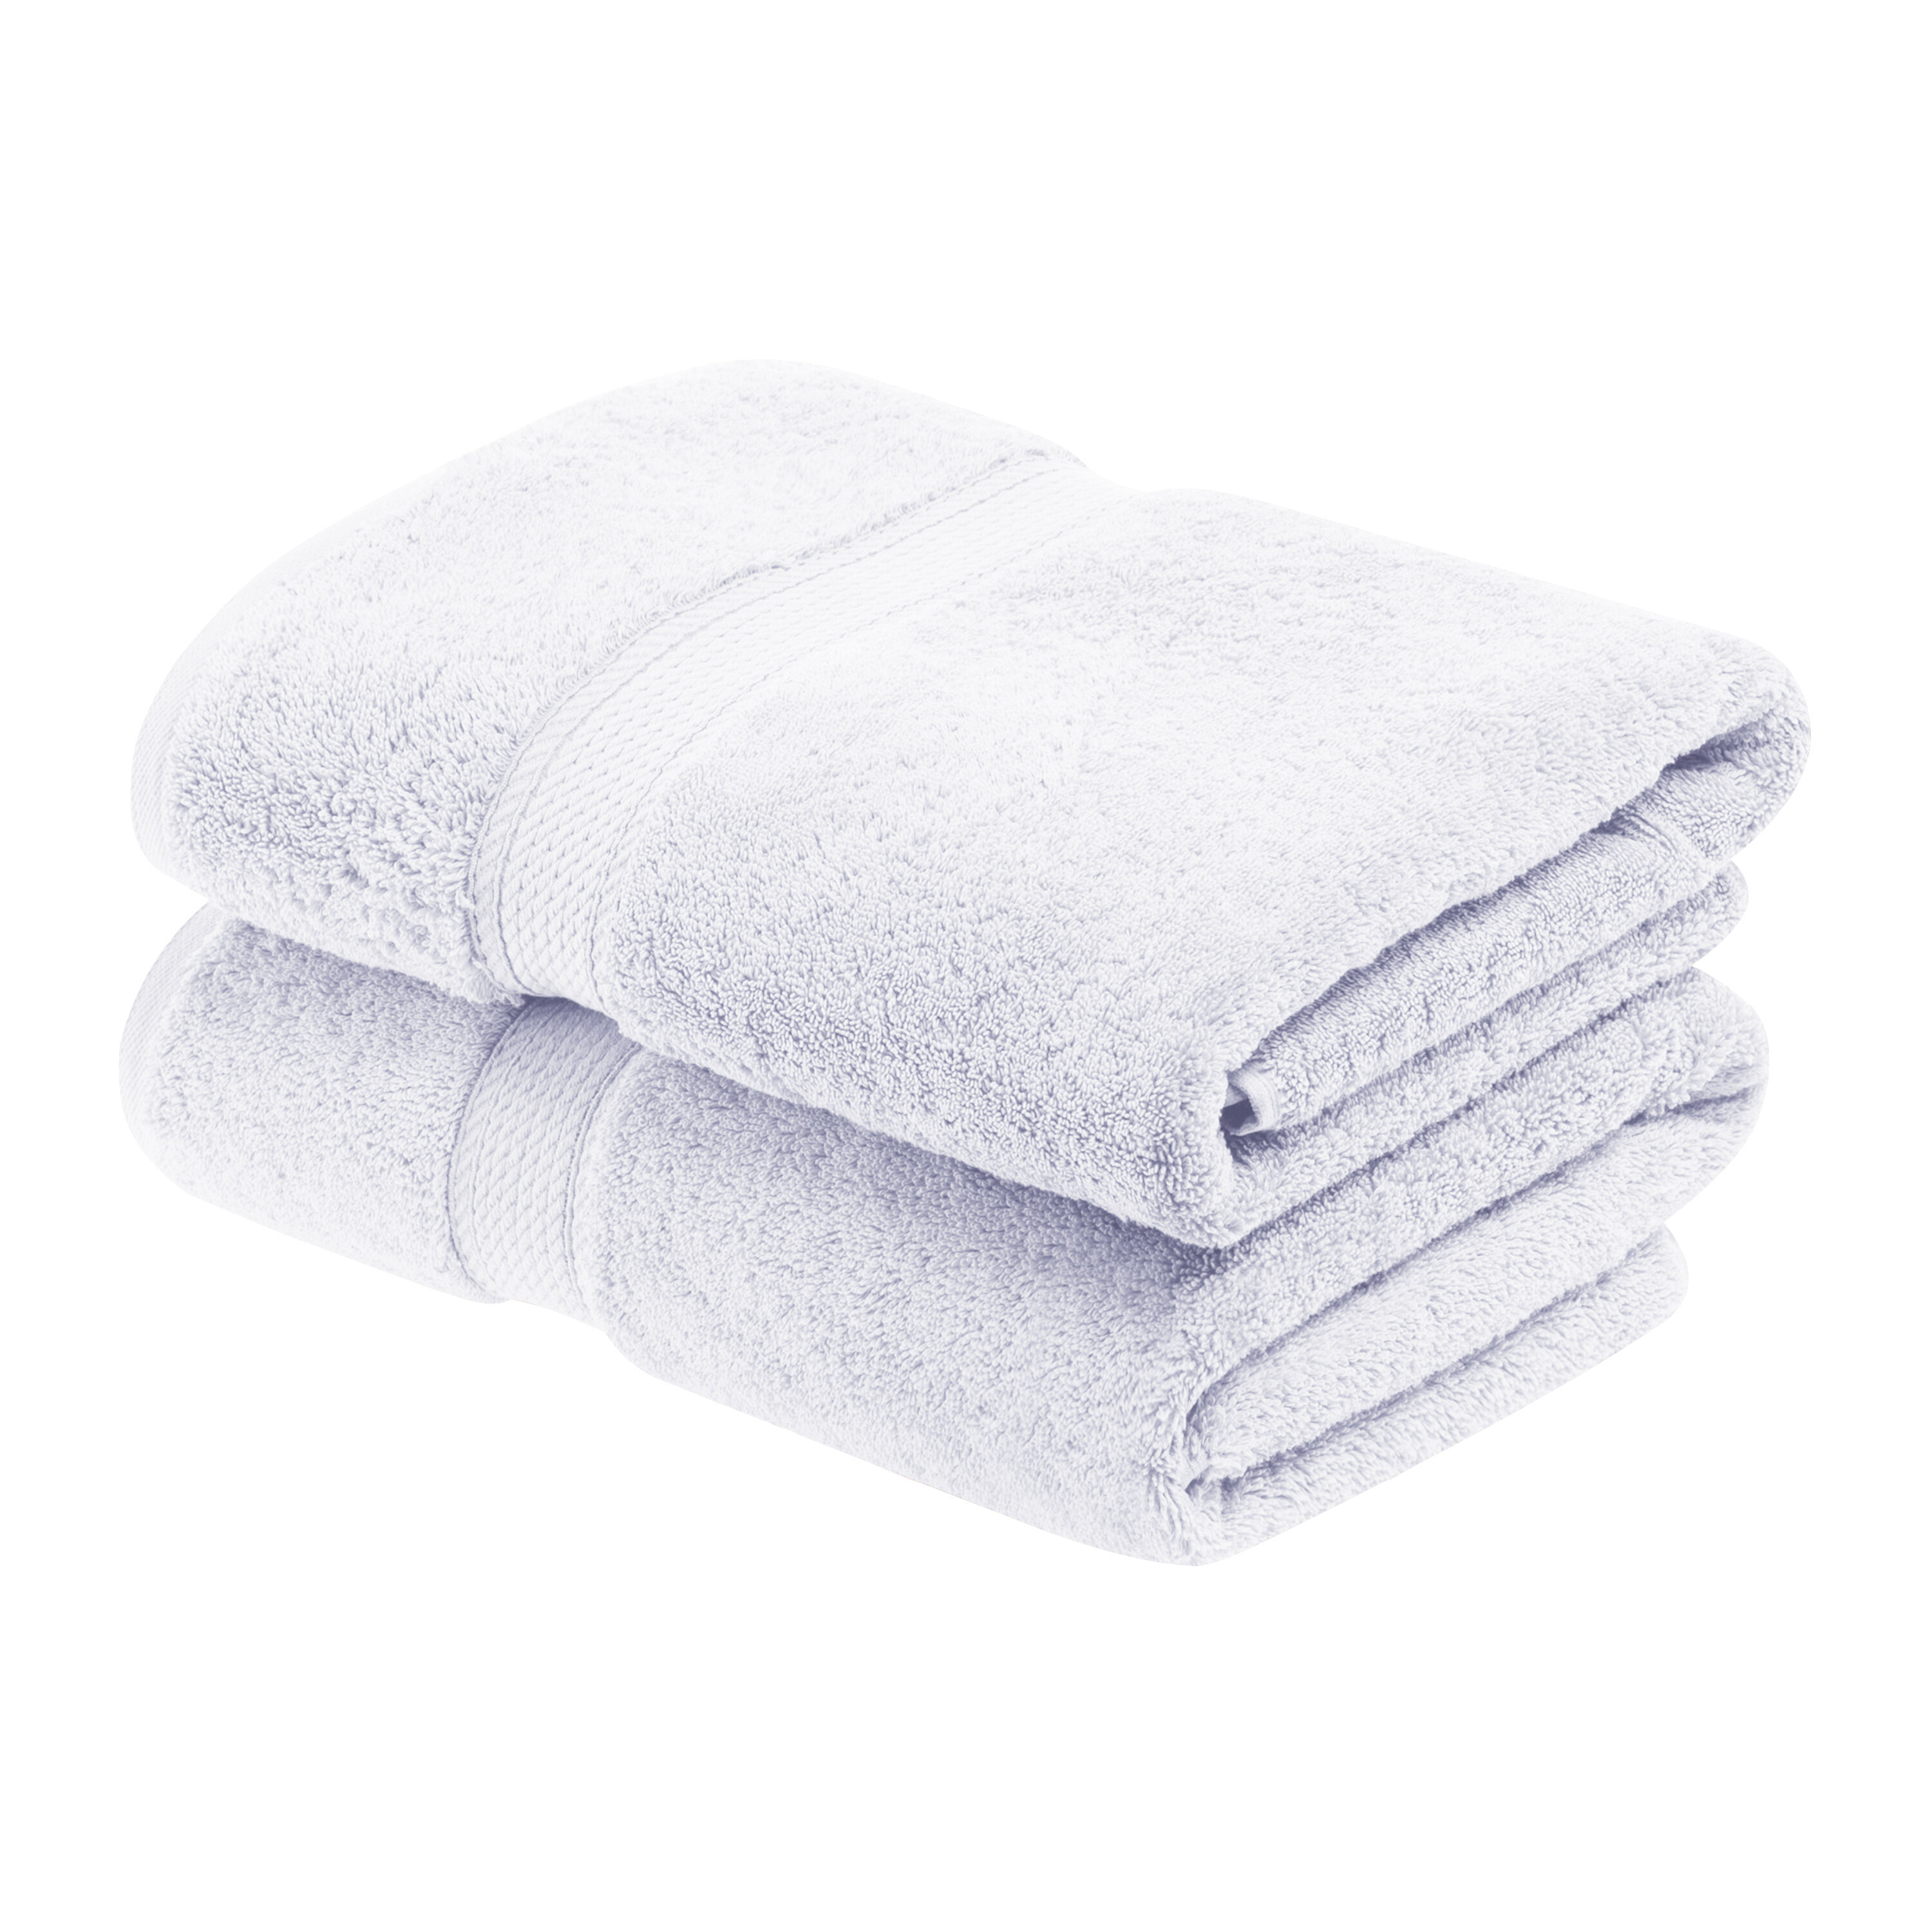 NEW Madison Park Signature 100% Cotton 8 Pcs Towel Set in Coral 800 GSM